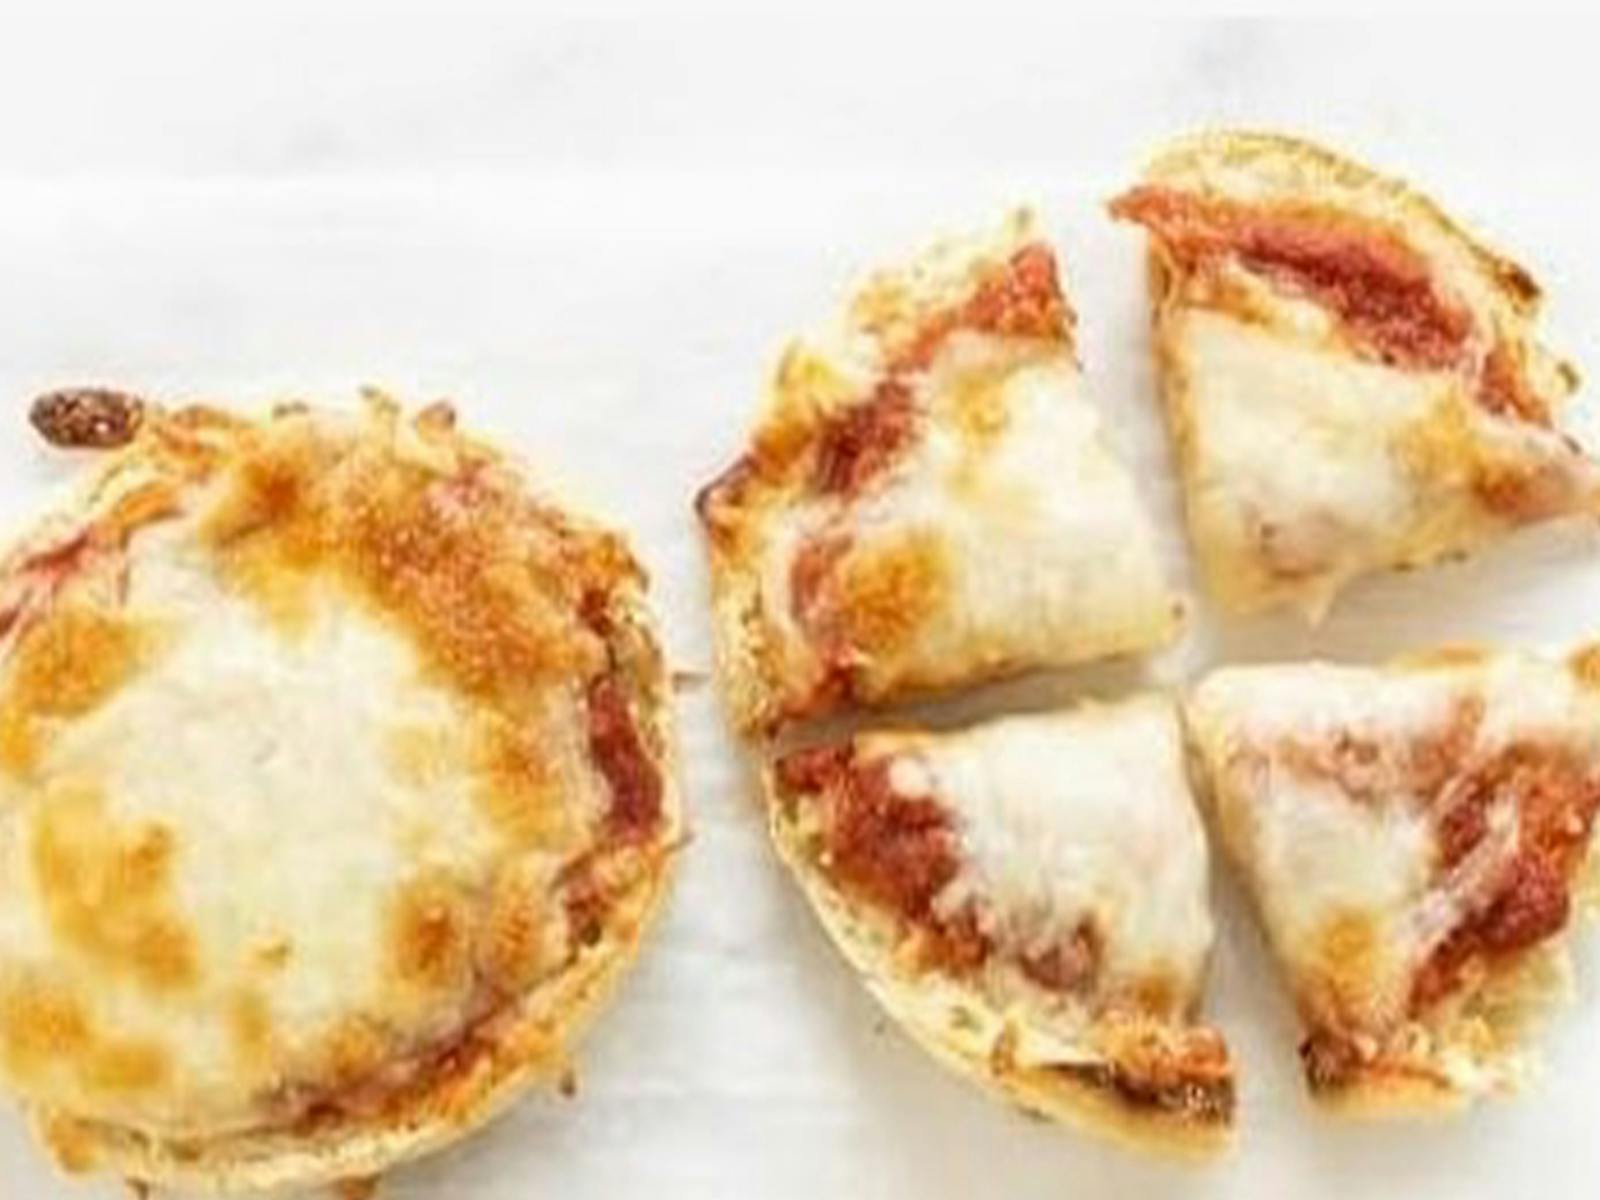 Pizza cut into 4 slices.